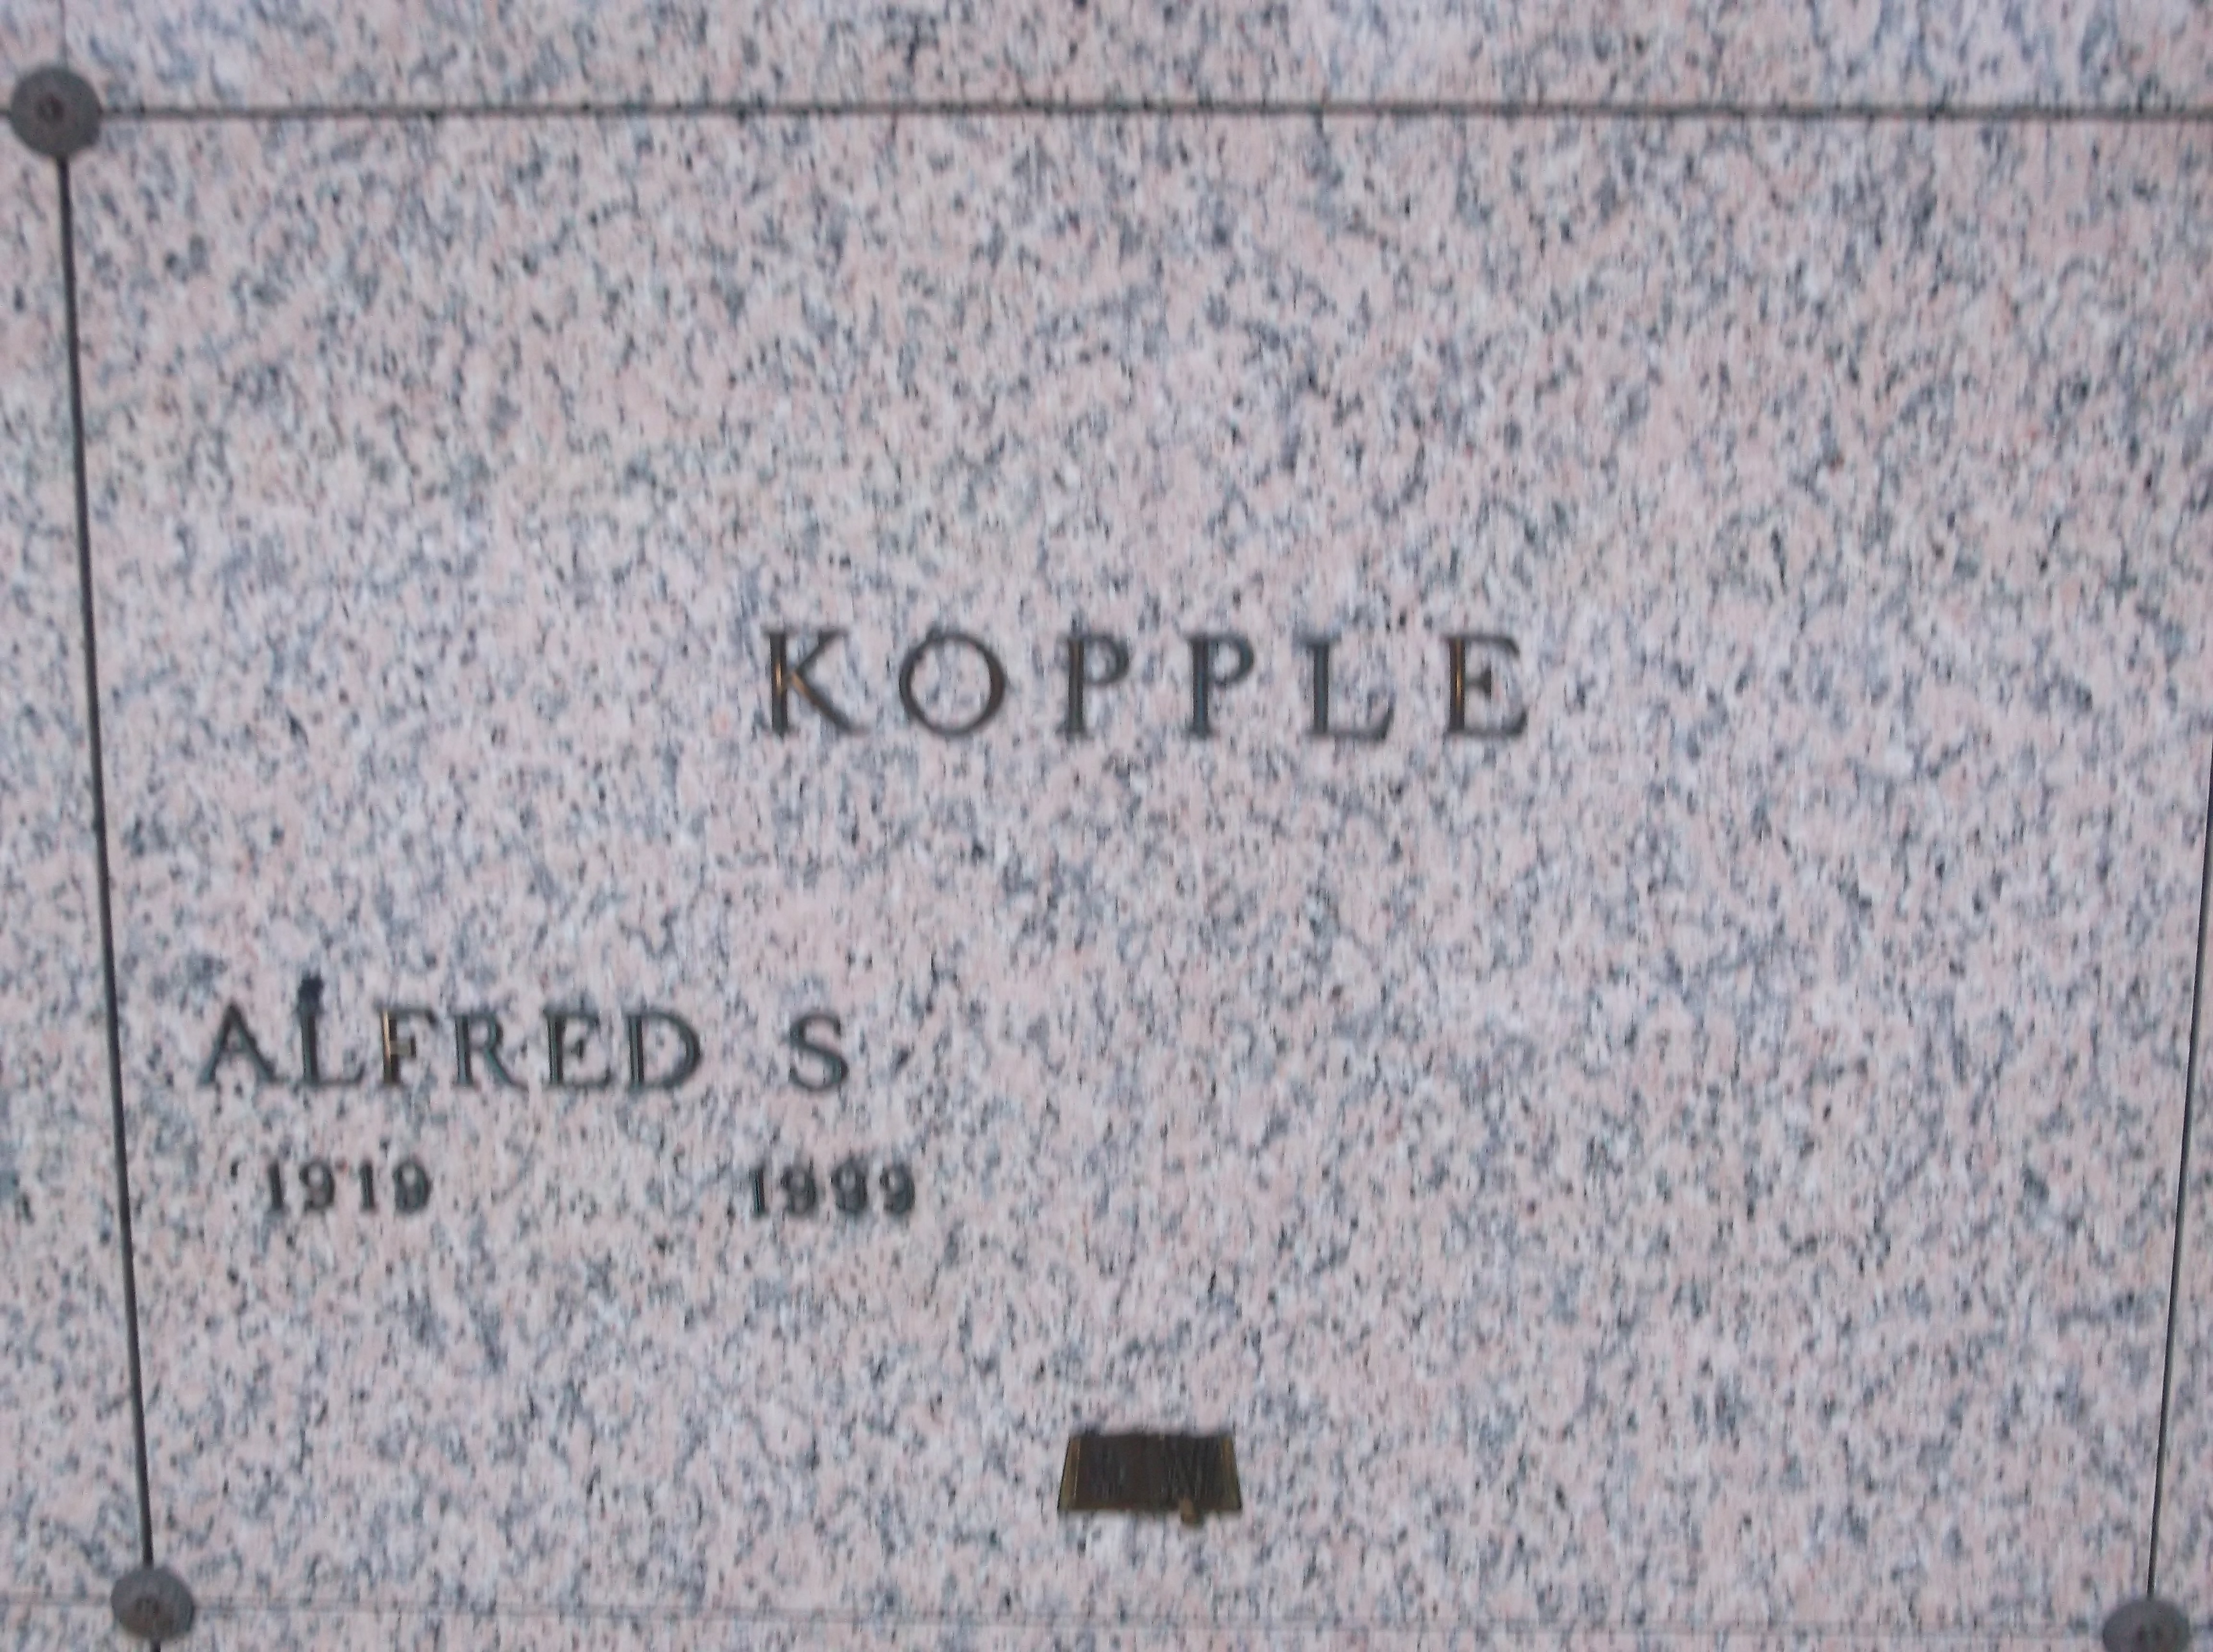 Alfred S Kopple